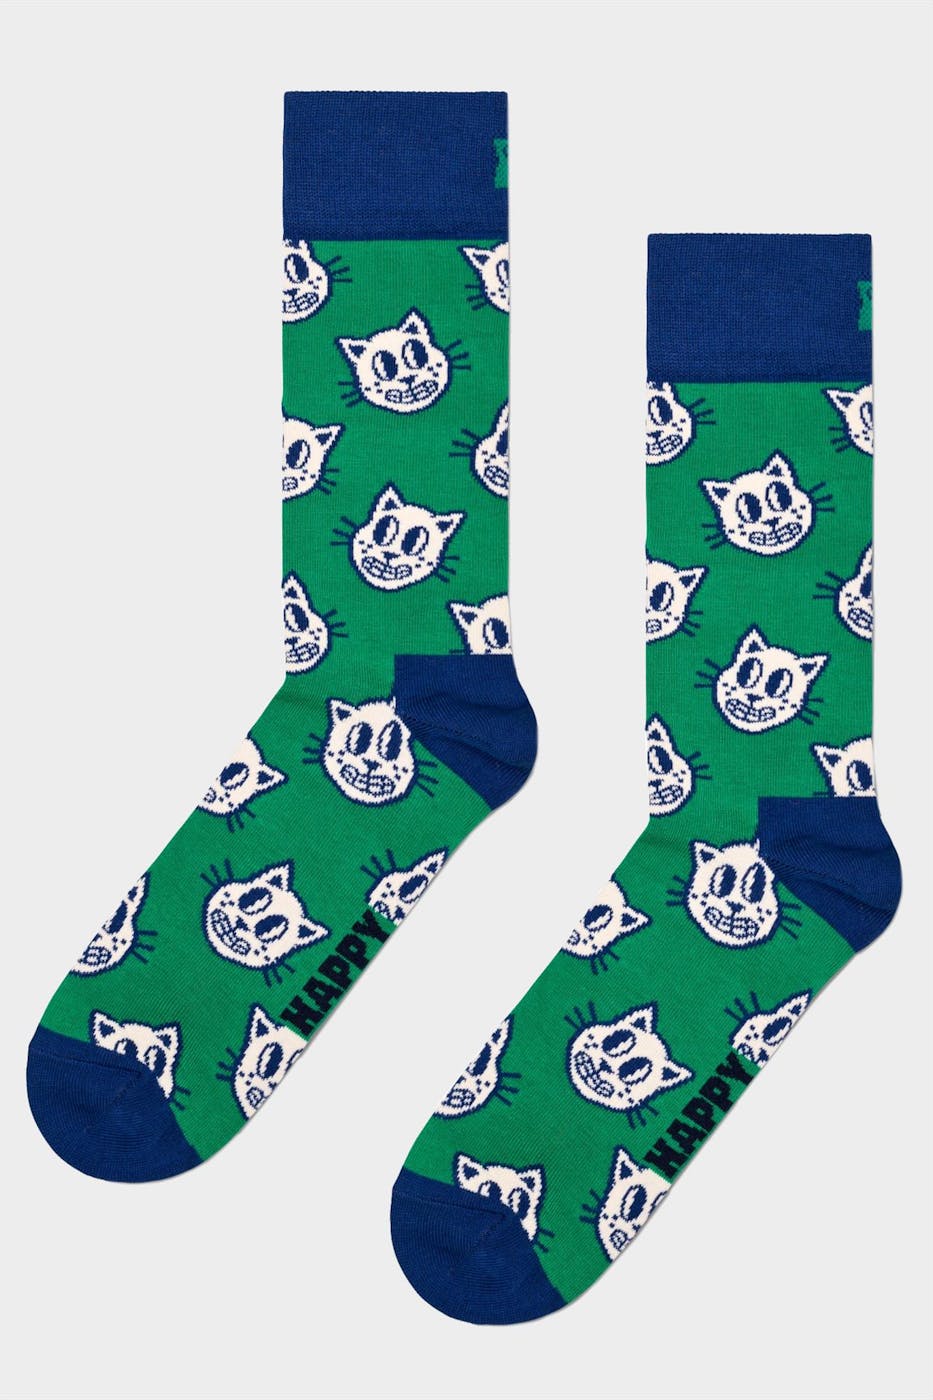 Happy Socks - Groene Cat sokken, maat: 41-46